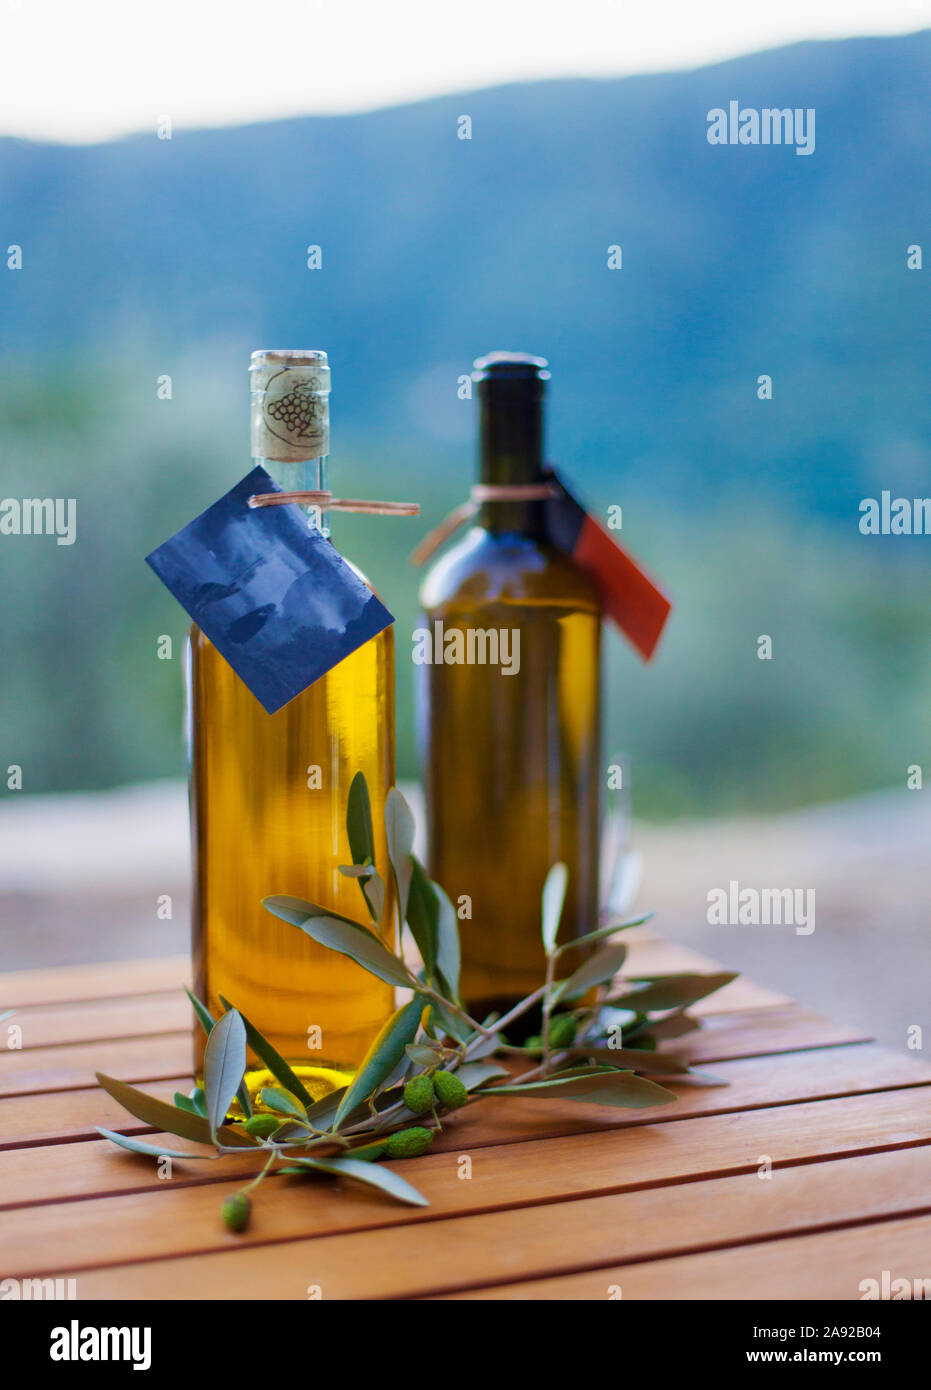 Delikatessen olivenöl -Fotos und -Bildmaterial in hoher Auflösung – Alamy